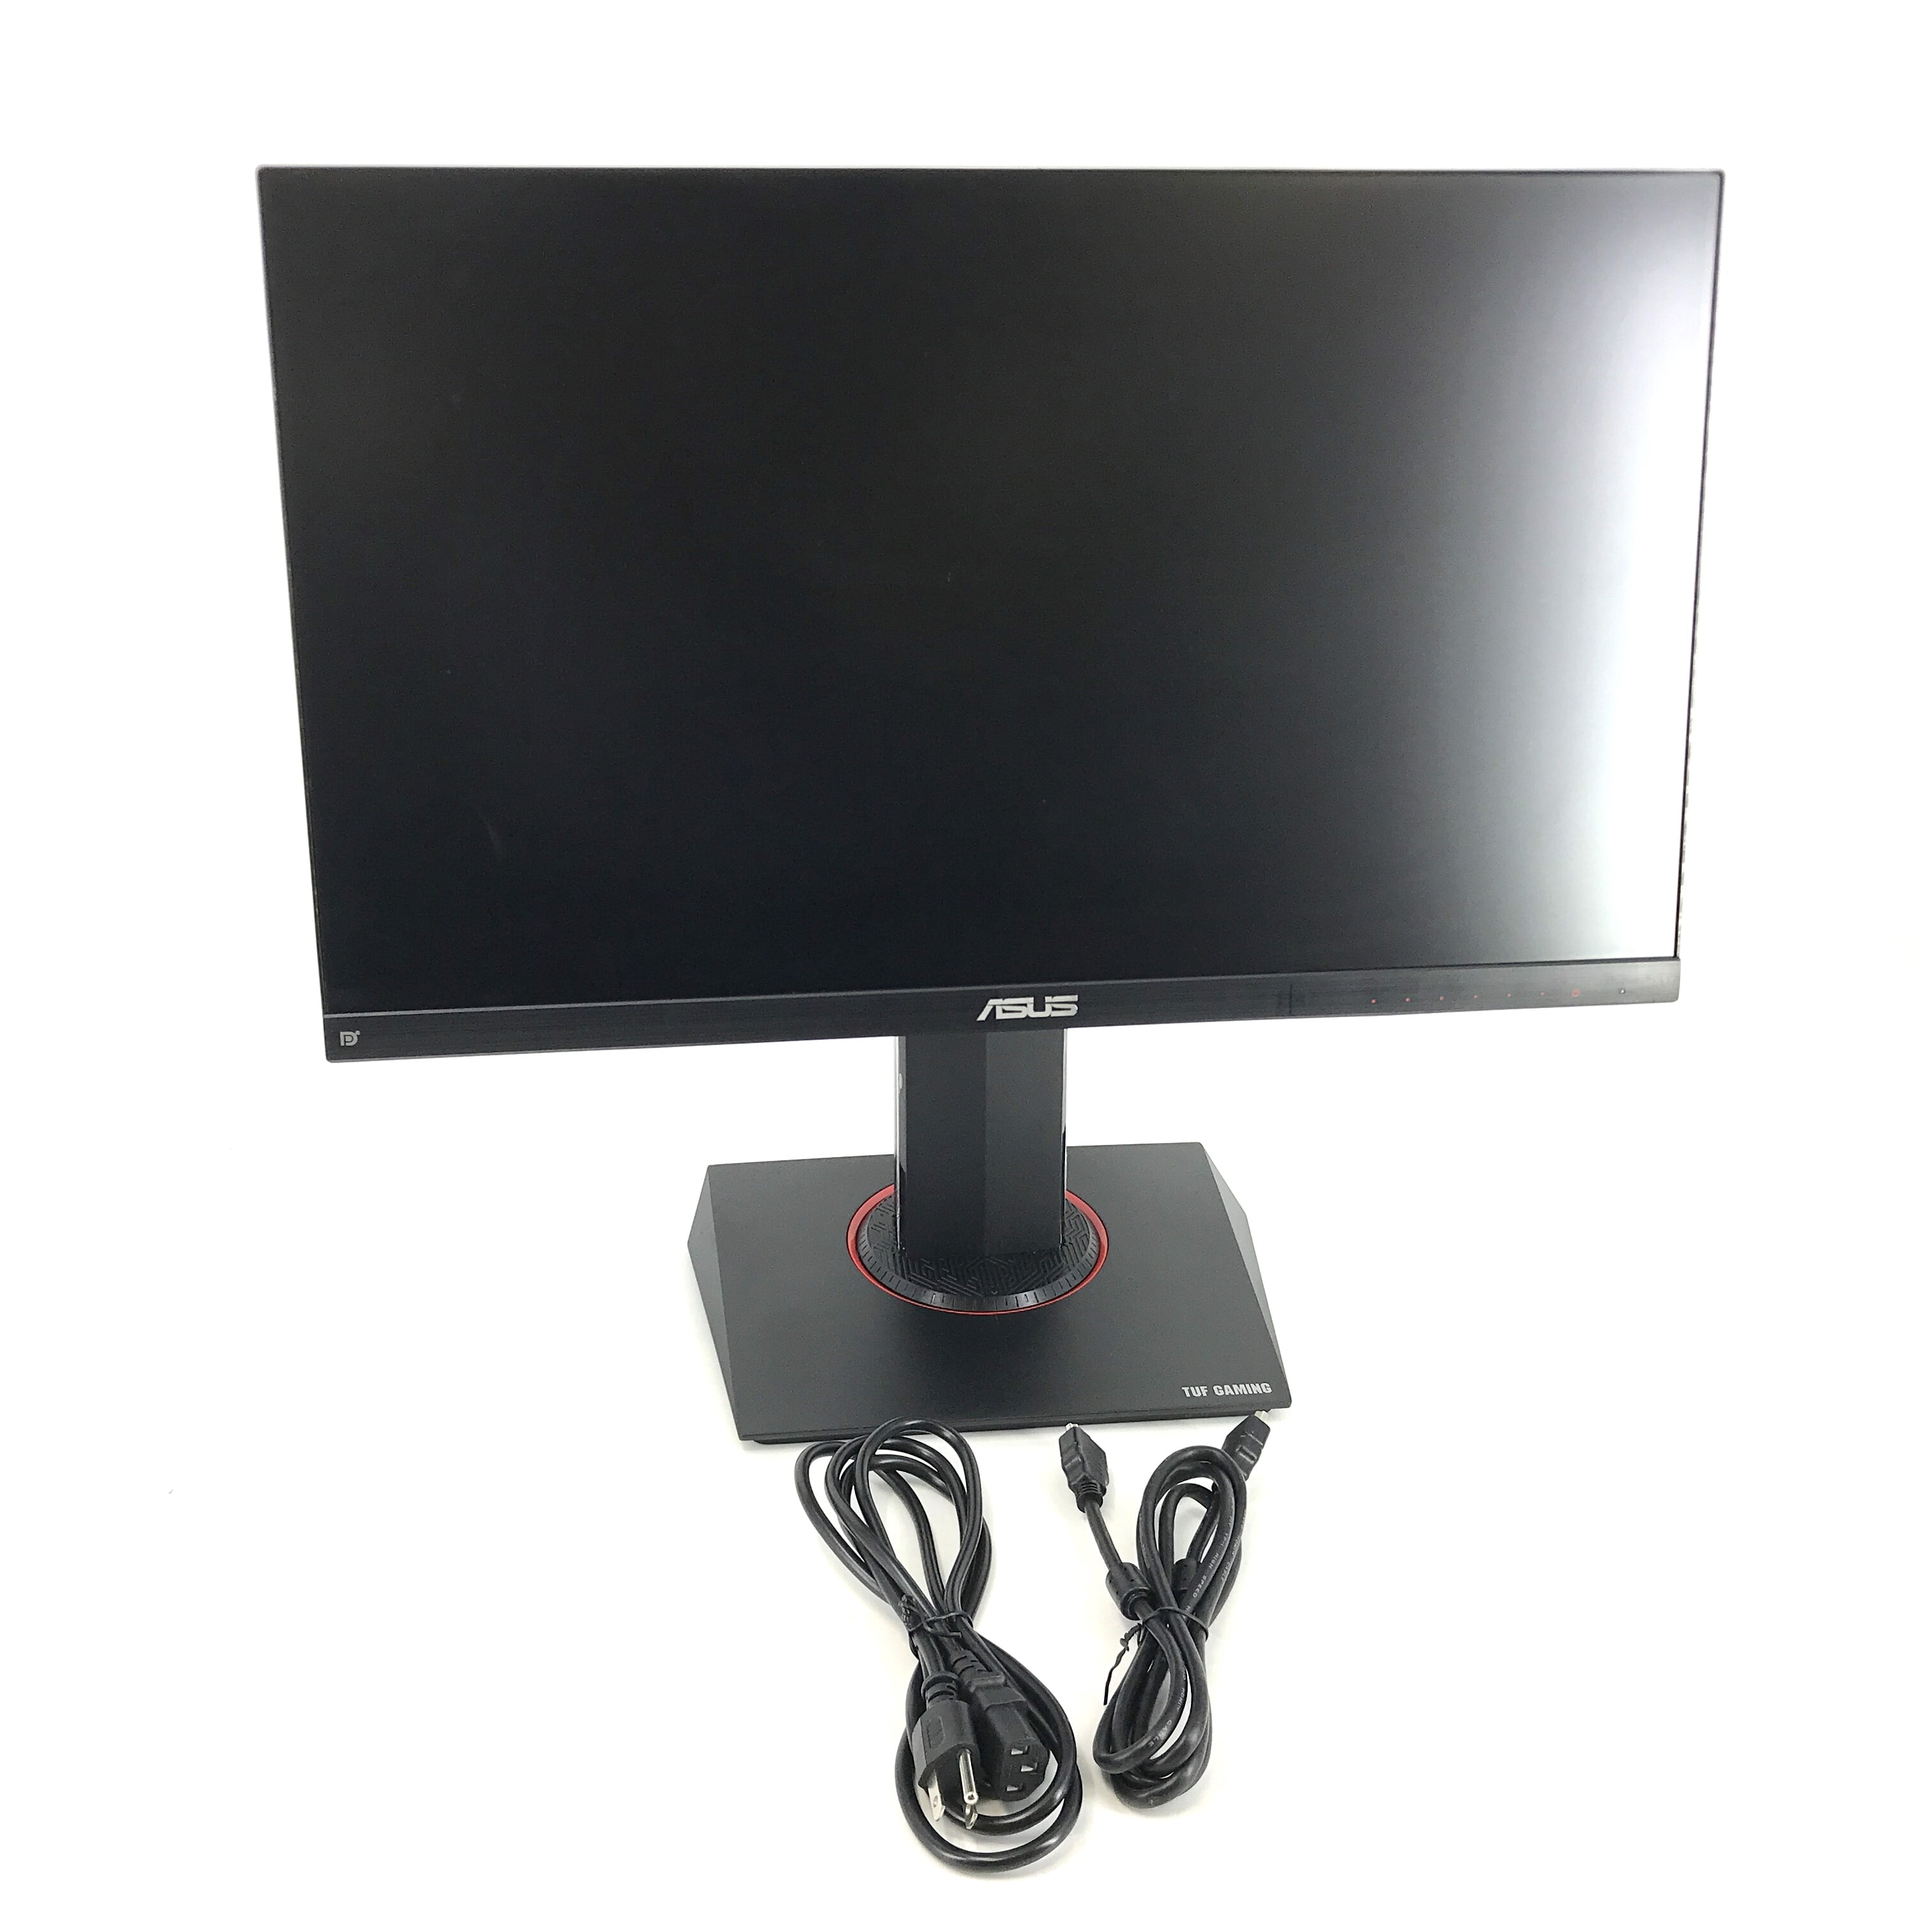 Asus Tuf 23 8 Gaming Monitor Model Vg249q Full Hd 19 X 1080 Black Used Walmart Com